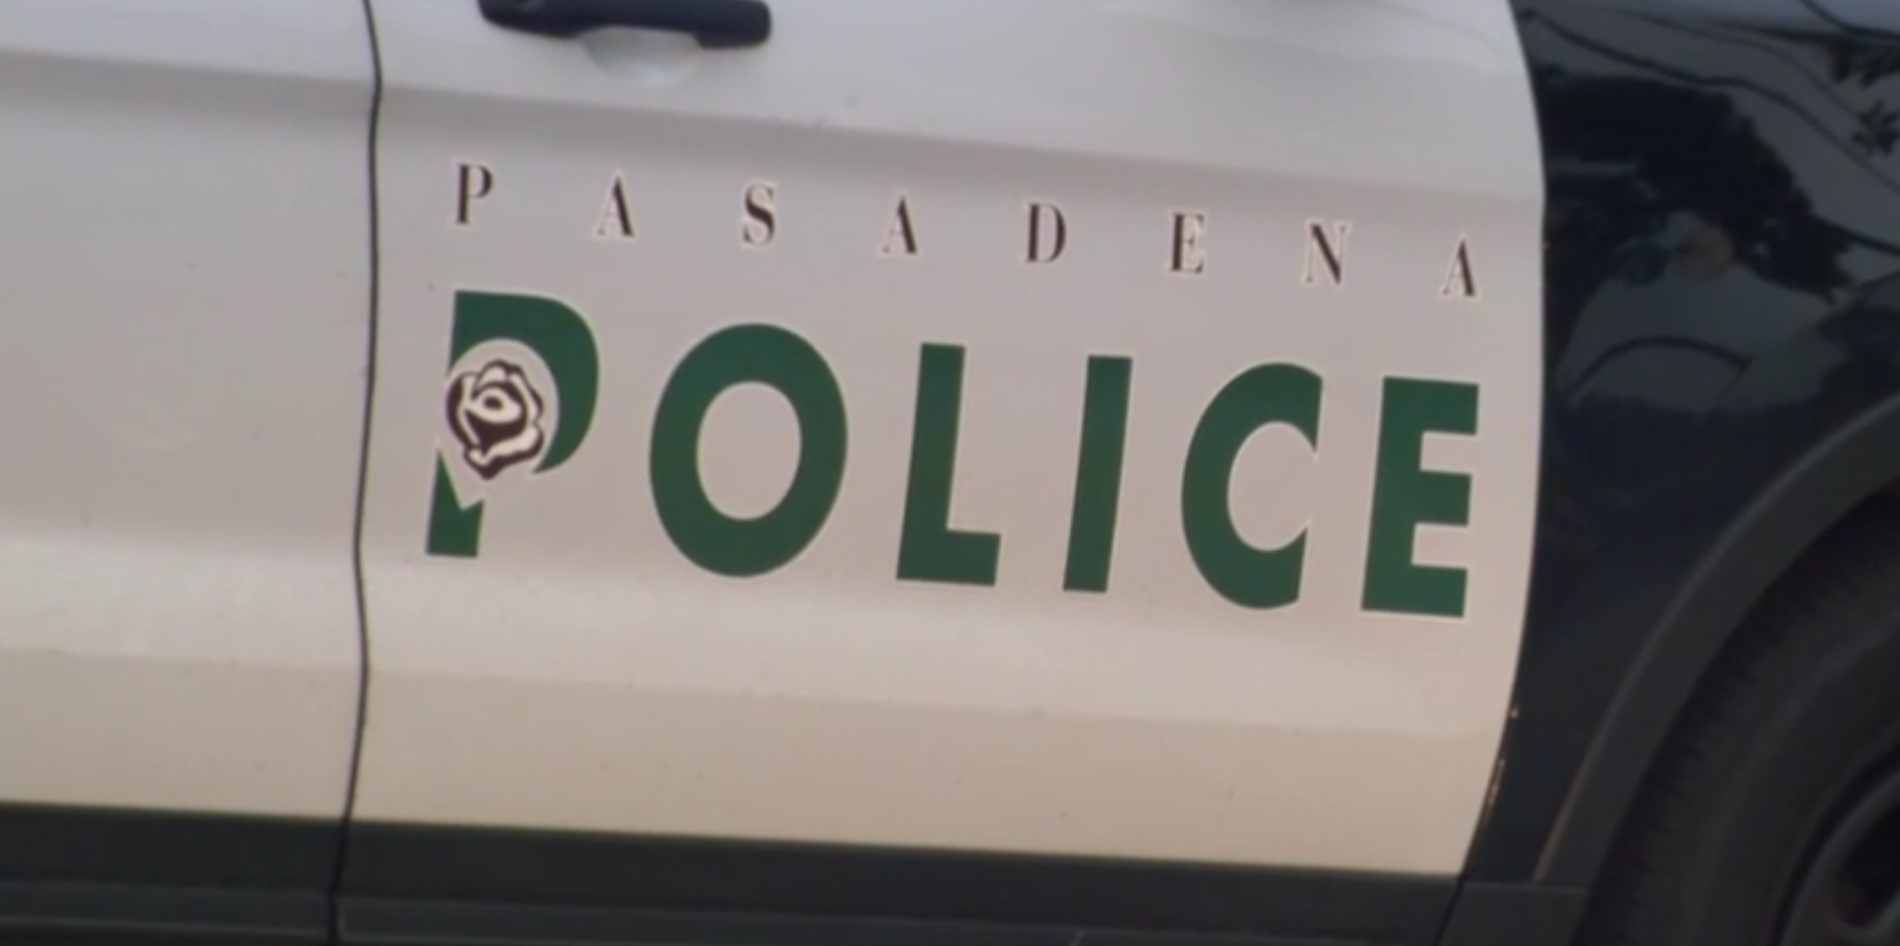 A Pasadena Police Department vehicle is seen in this file image taken on Jan. 18, 2022. (KTLA)